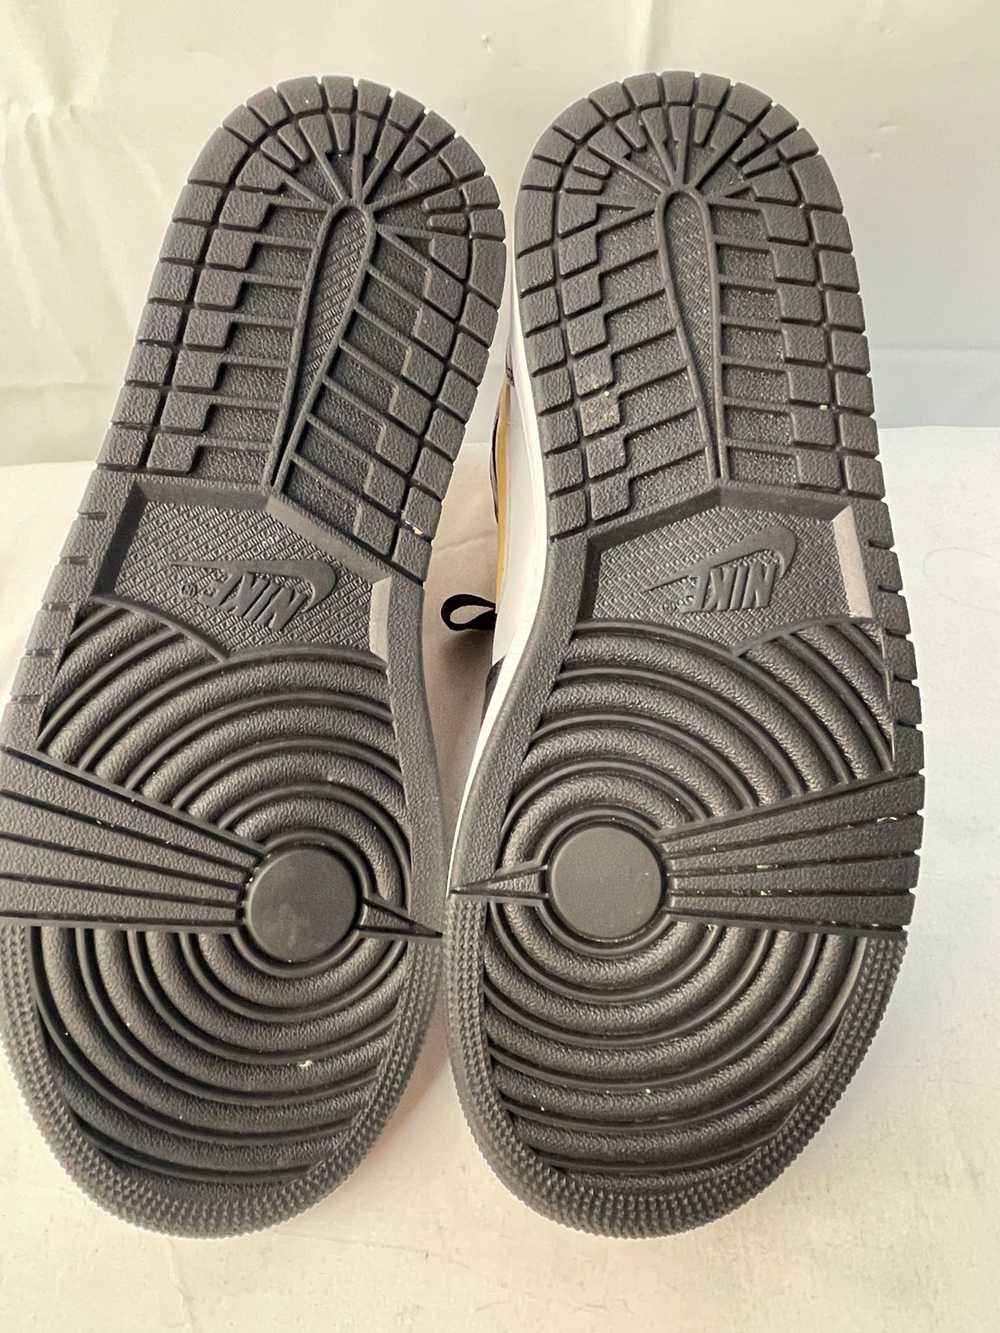 Black/White/Gold Air Jordans 554724-177 Size 9 - image 3